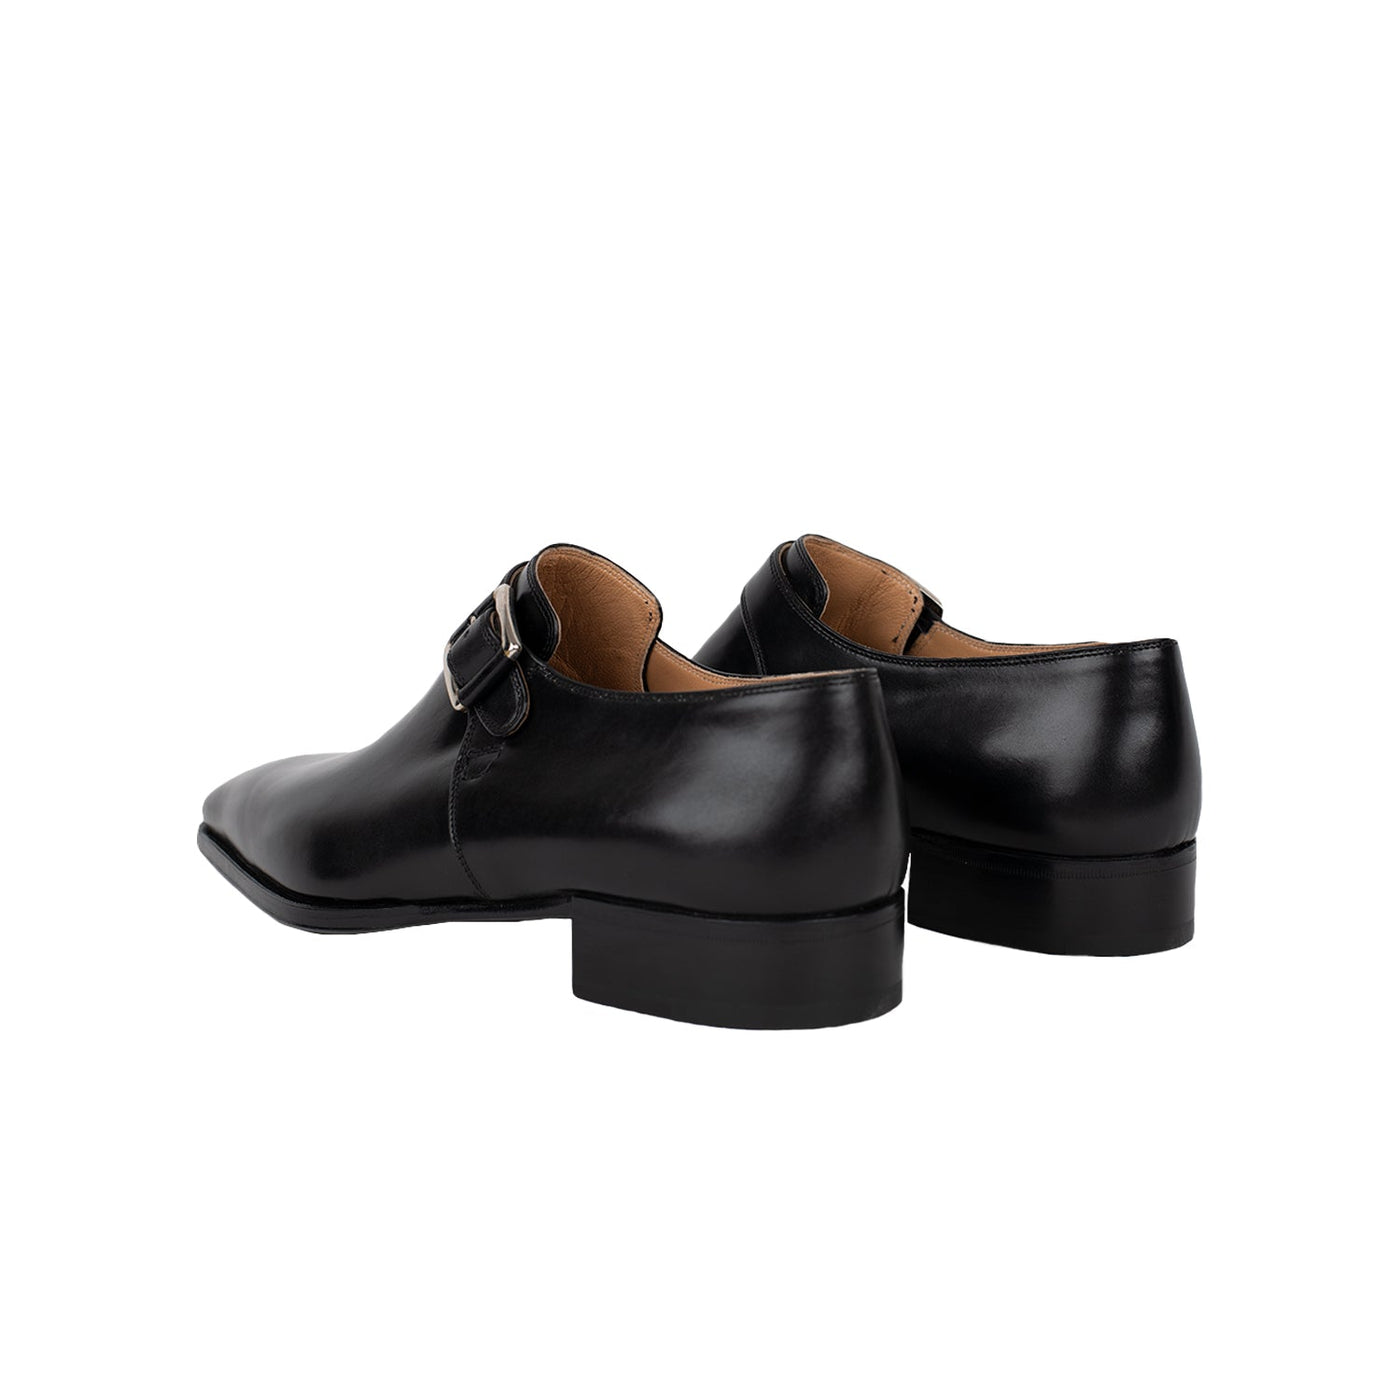 Artioli handmade black leather elegant loafer Pre-owned